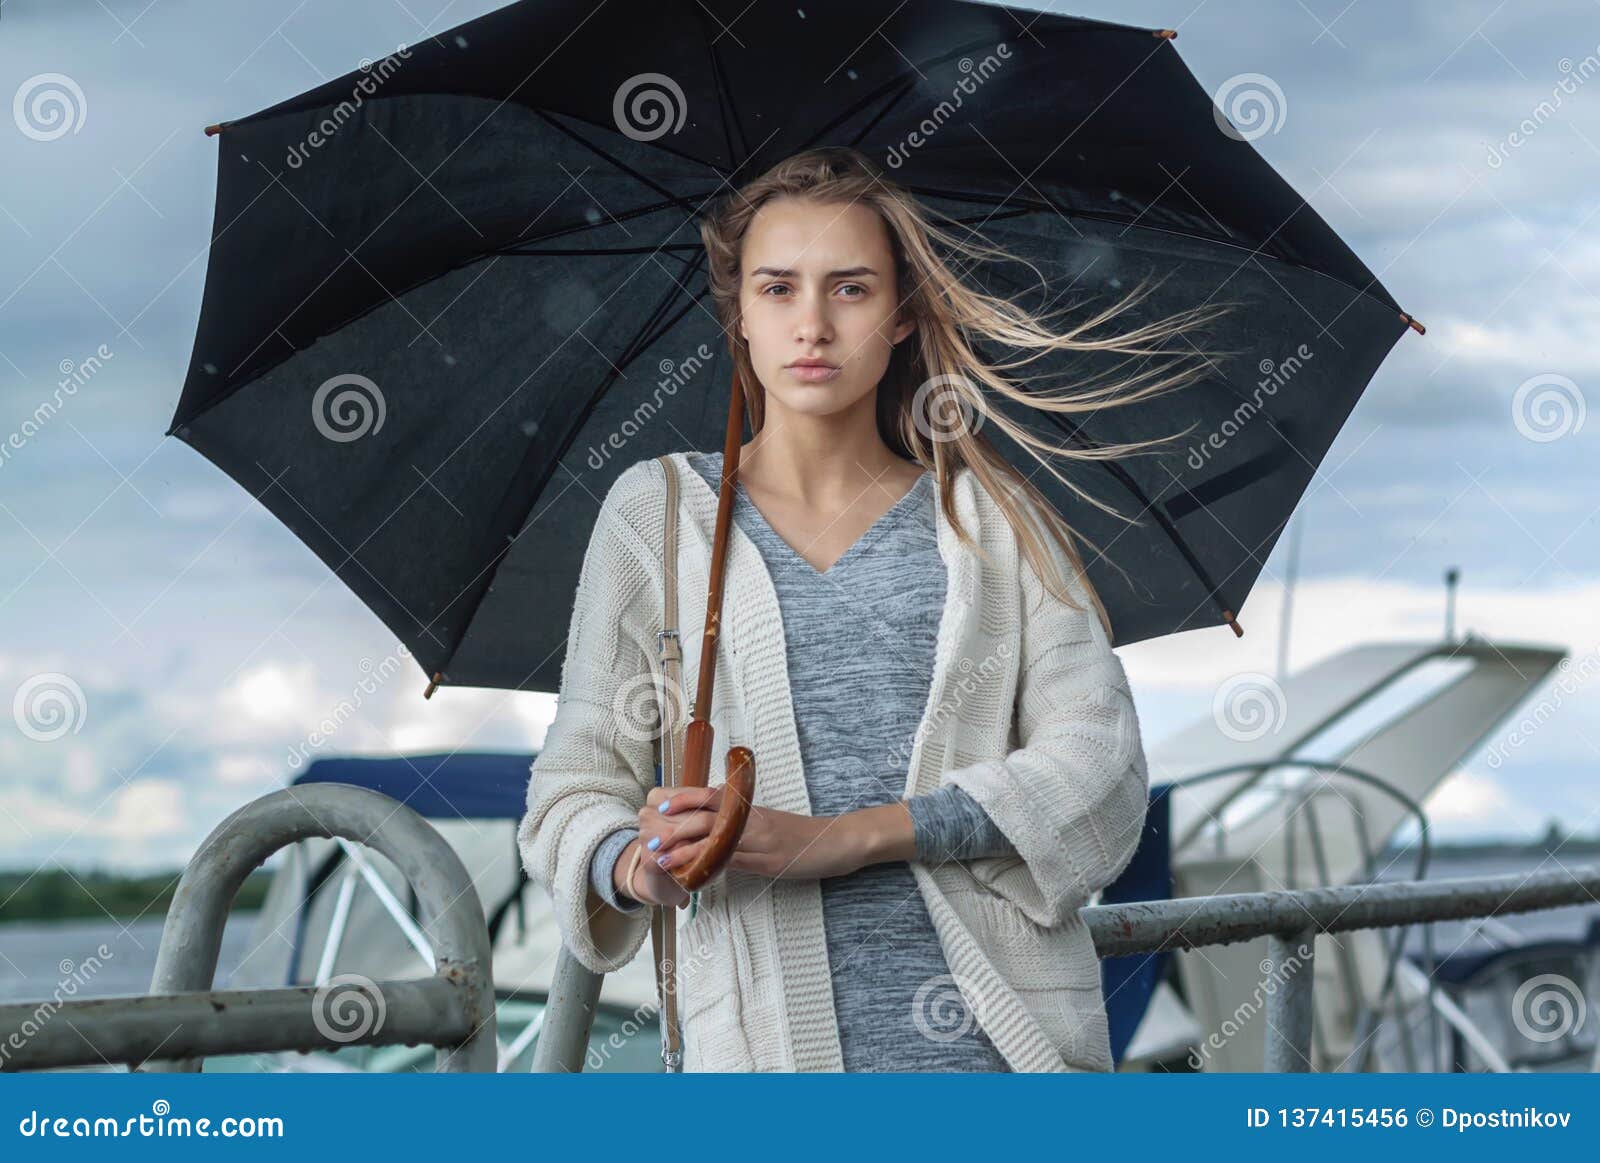 Sad Girl Hiding Under A Black Umbrella From The Rain